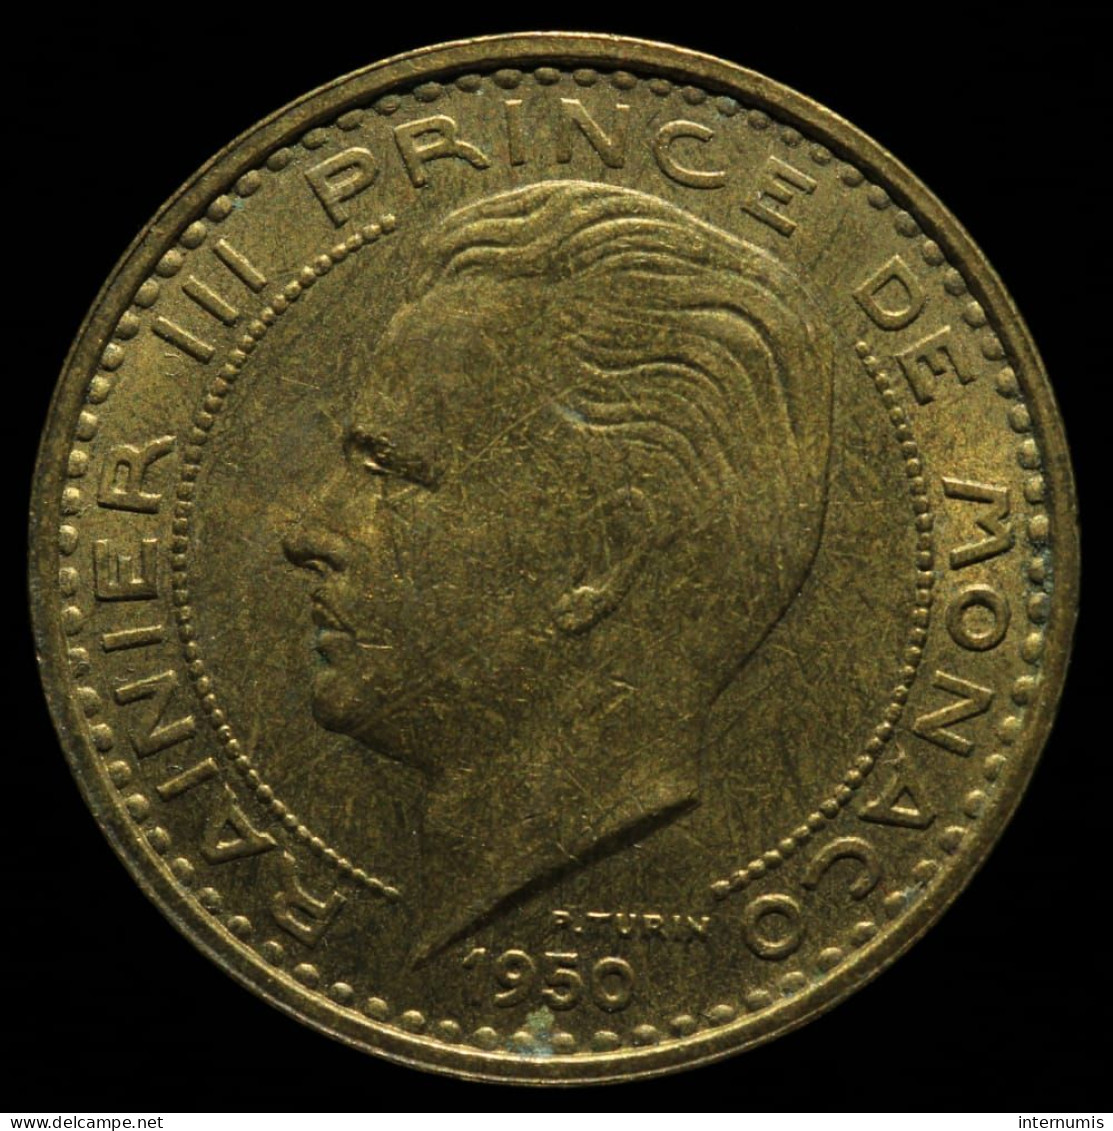 Monaco, Rainier III, 50 Francs, 1950, Cu-Al, NC (UNC), KM#132, G.MC141 - 1949-1956 Oude Frank